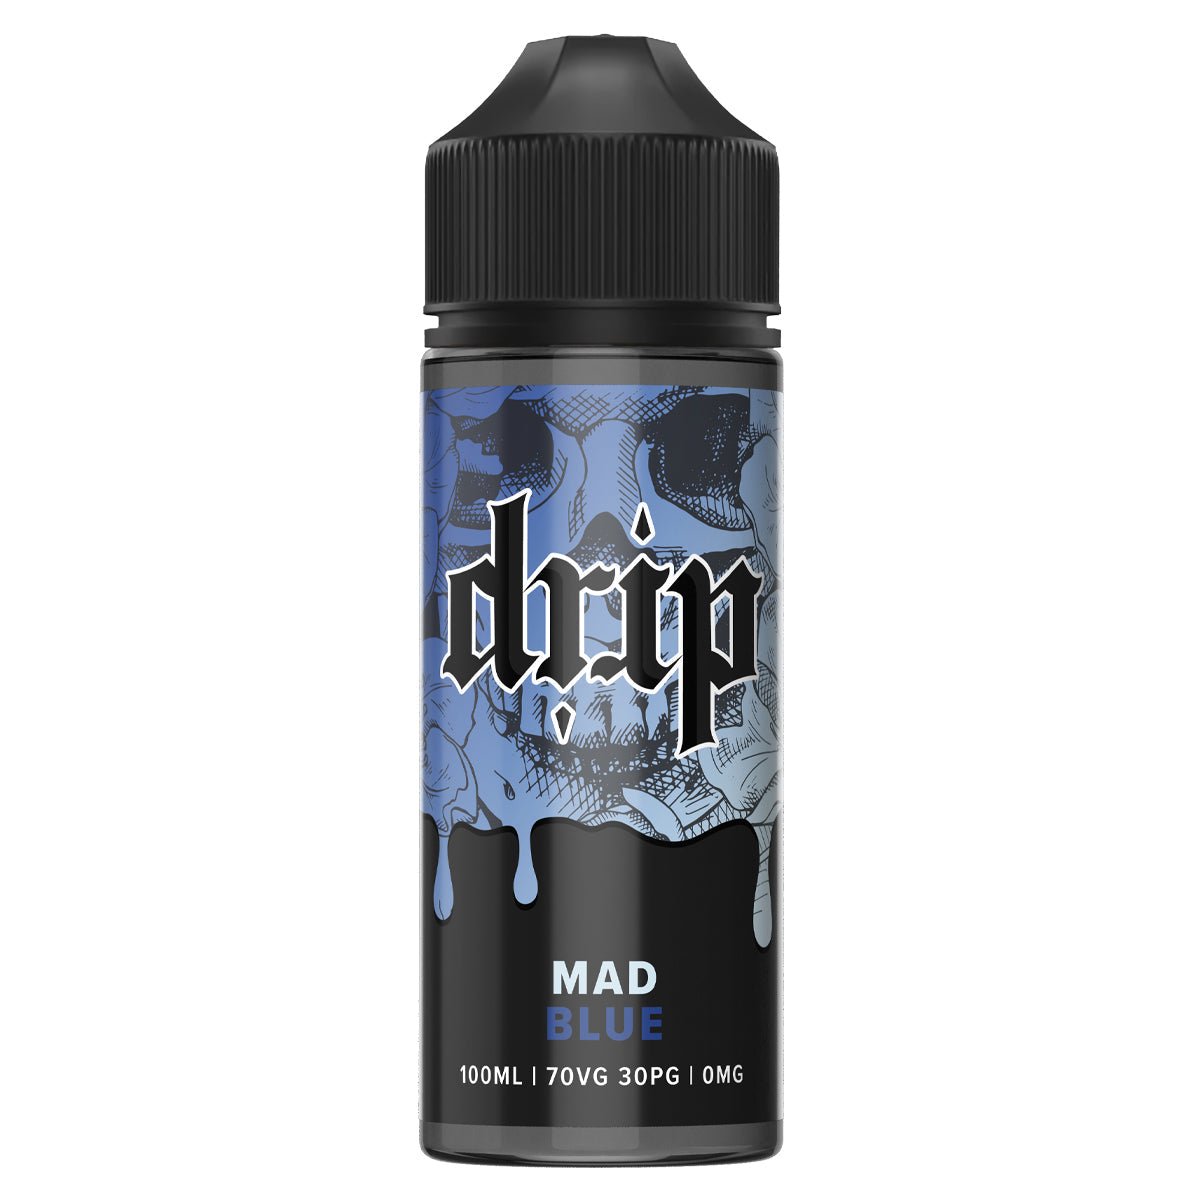 Mad Blue 100ml Shortfill By Drip - Manabush Eliquid - Tobacco E-liquid and Vape Juice